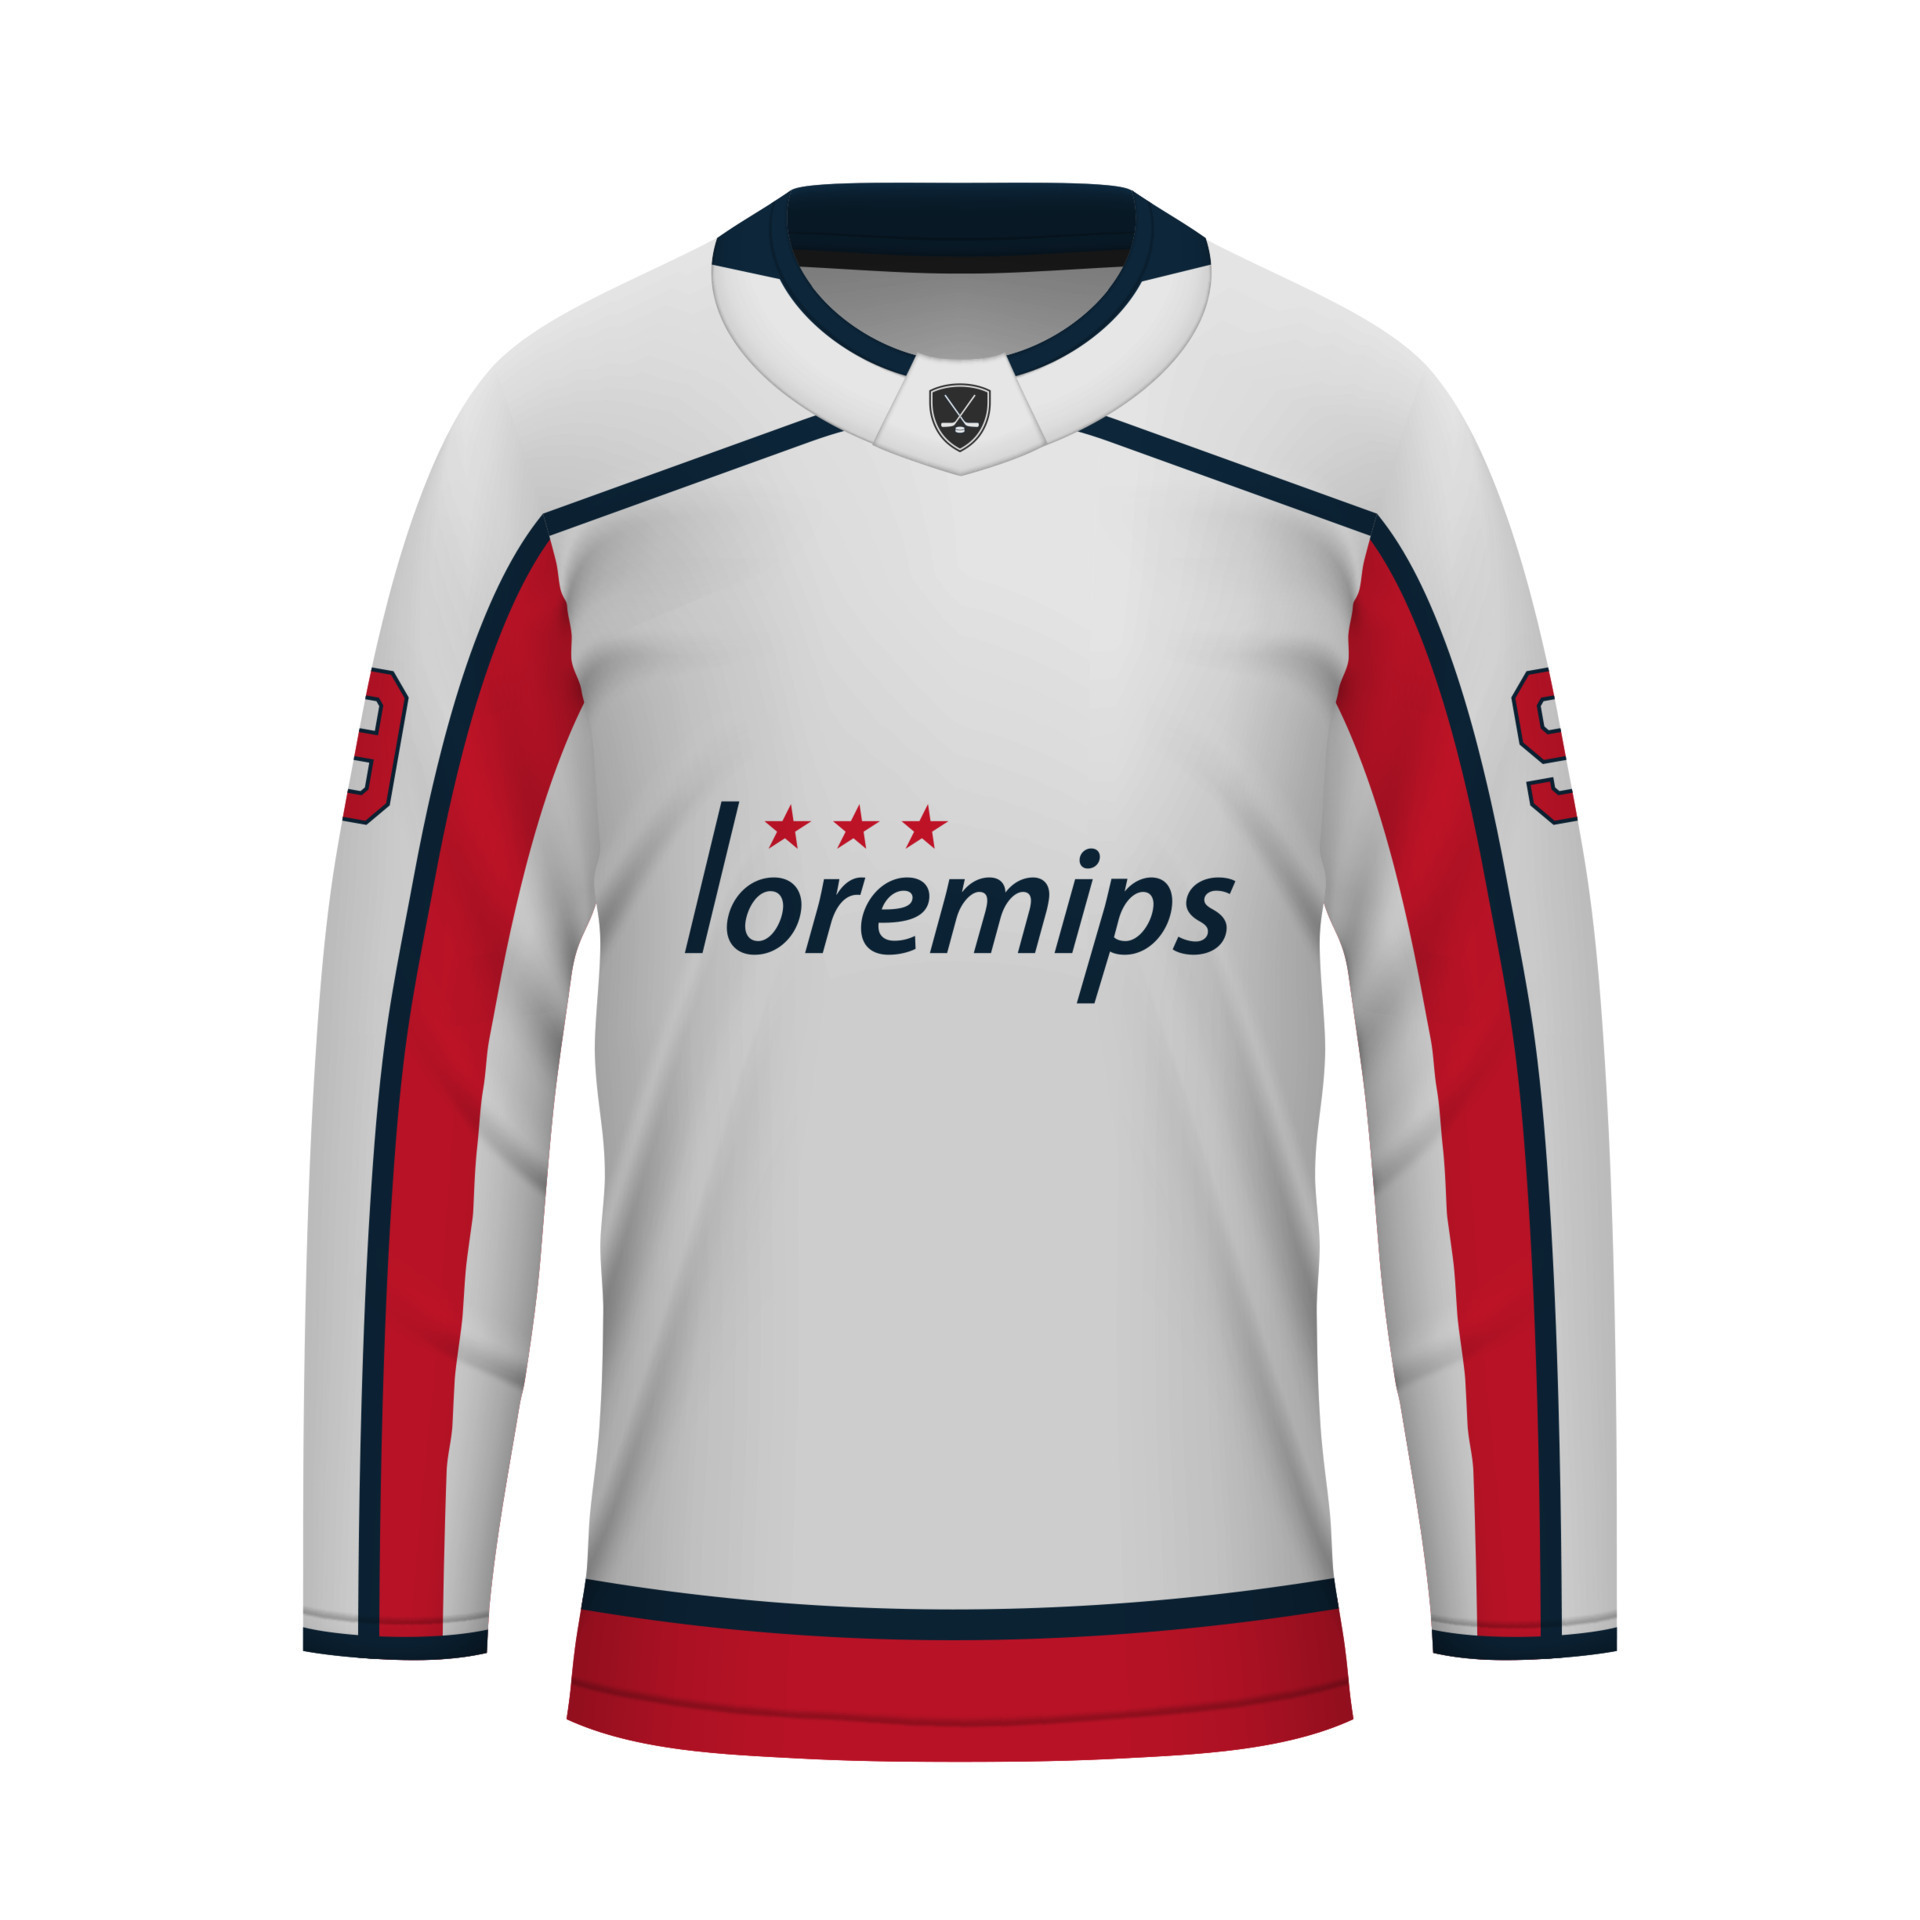 Realistic hockey kit, shirt template for ice hockey jersey